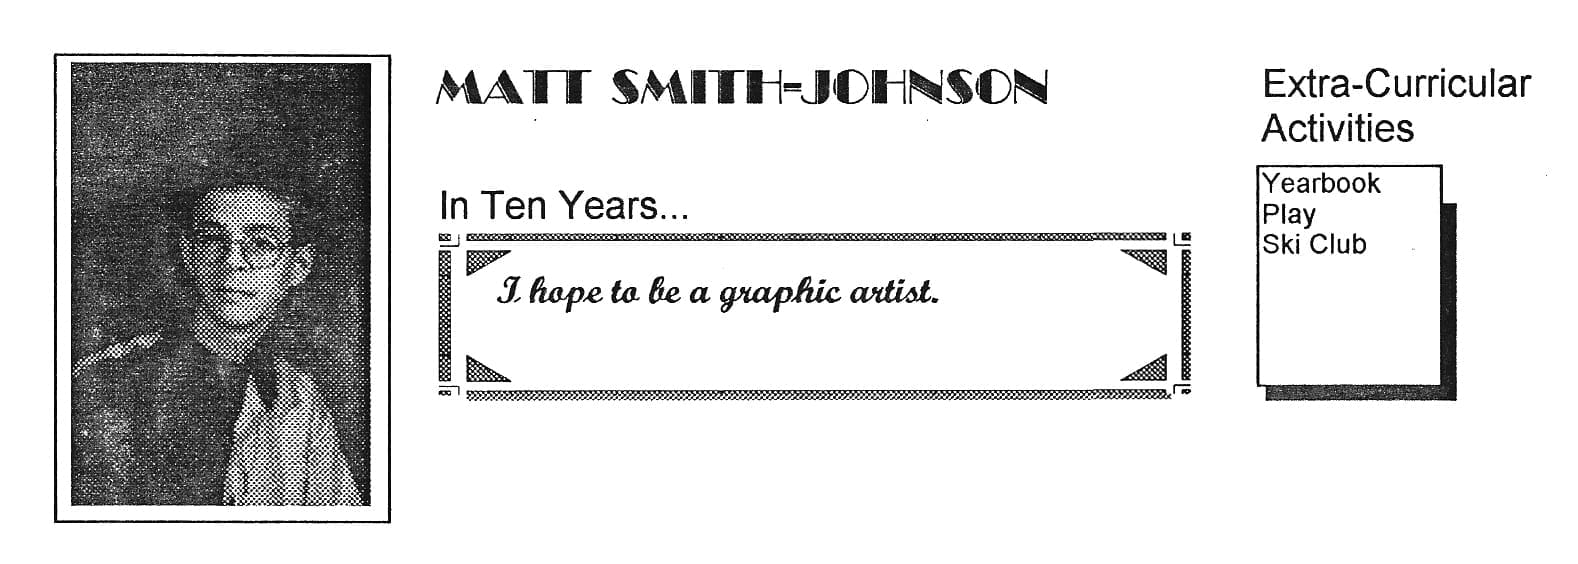 MATT SMITH JOHNSON grade school yearbook